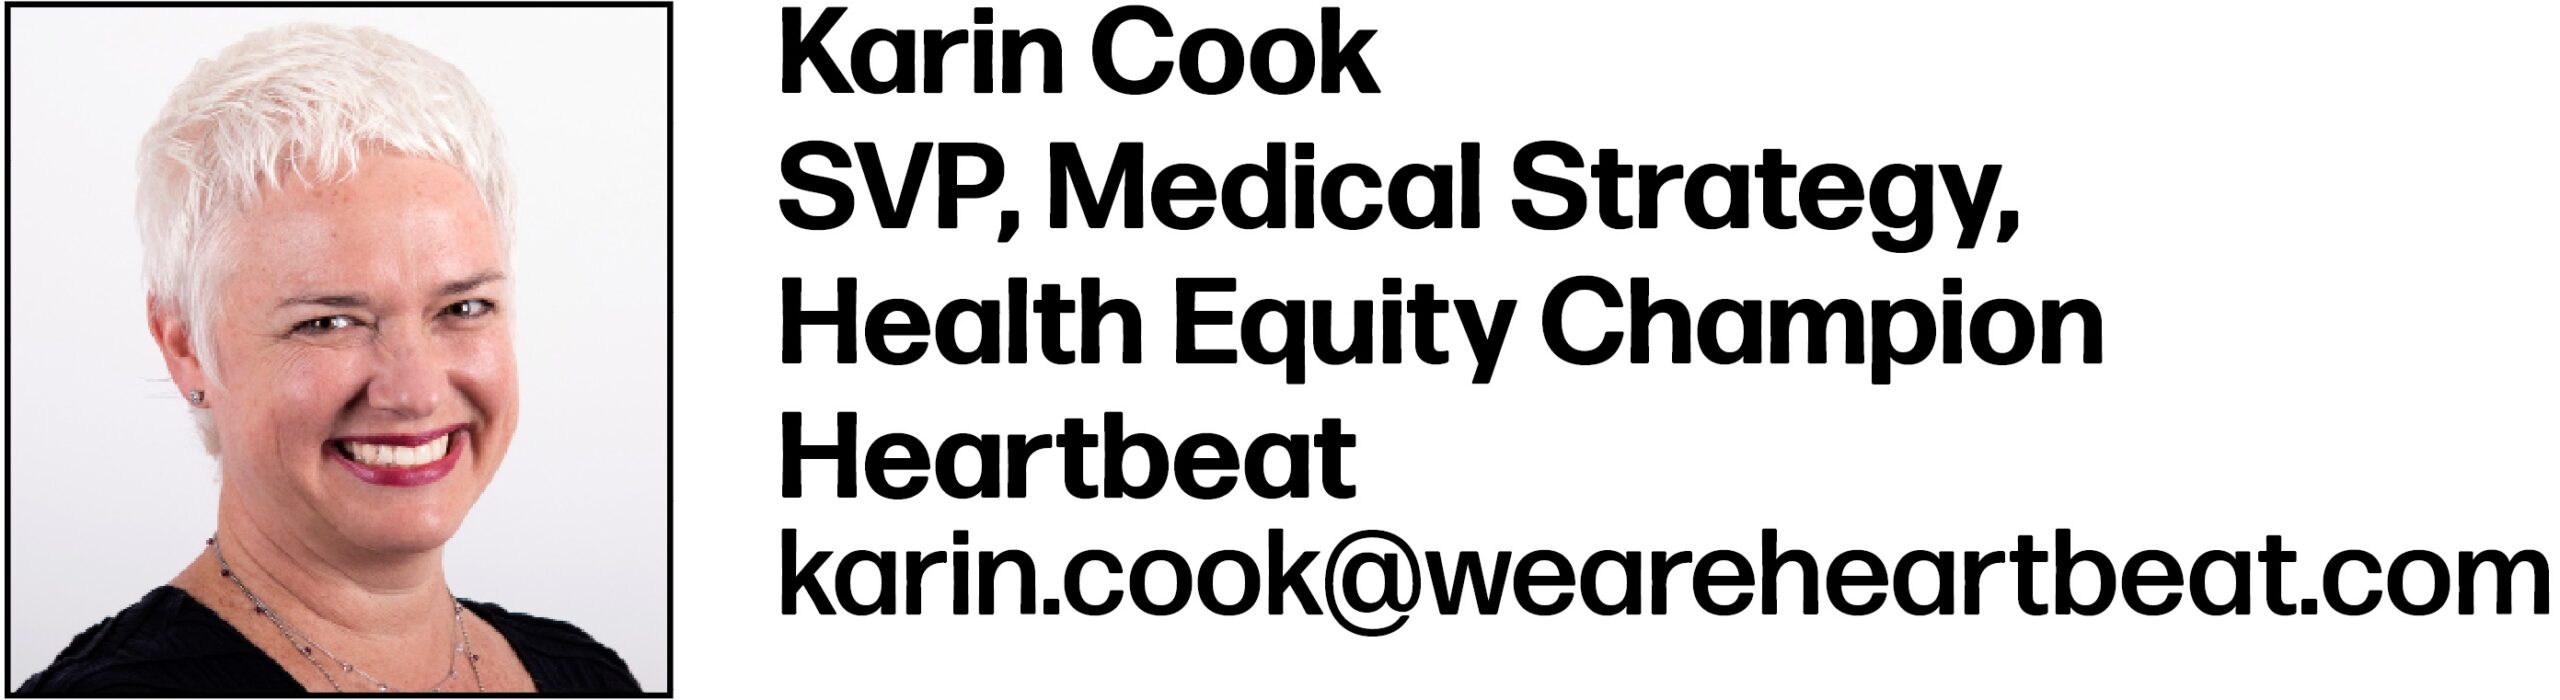 Karin Cook
SVP, Medical Strategy, Health Equity Champion
Heartbeat
karin.cook@weareheartbeat.com 